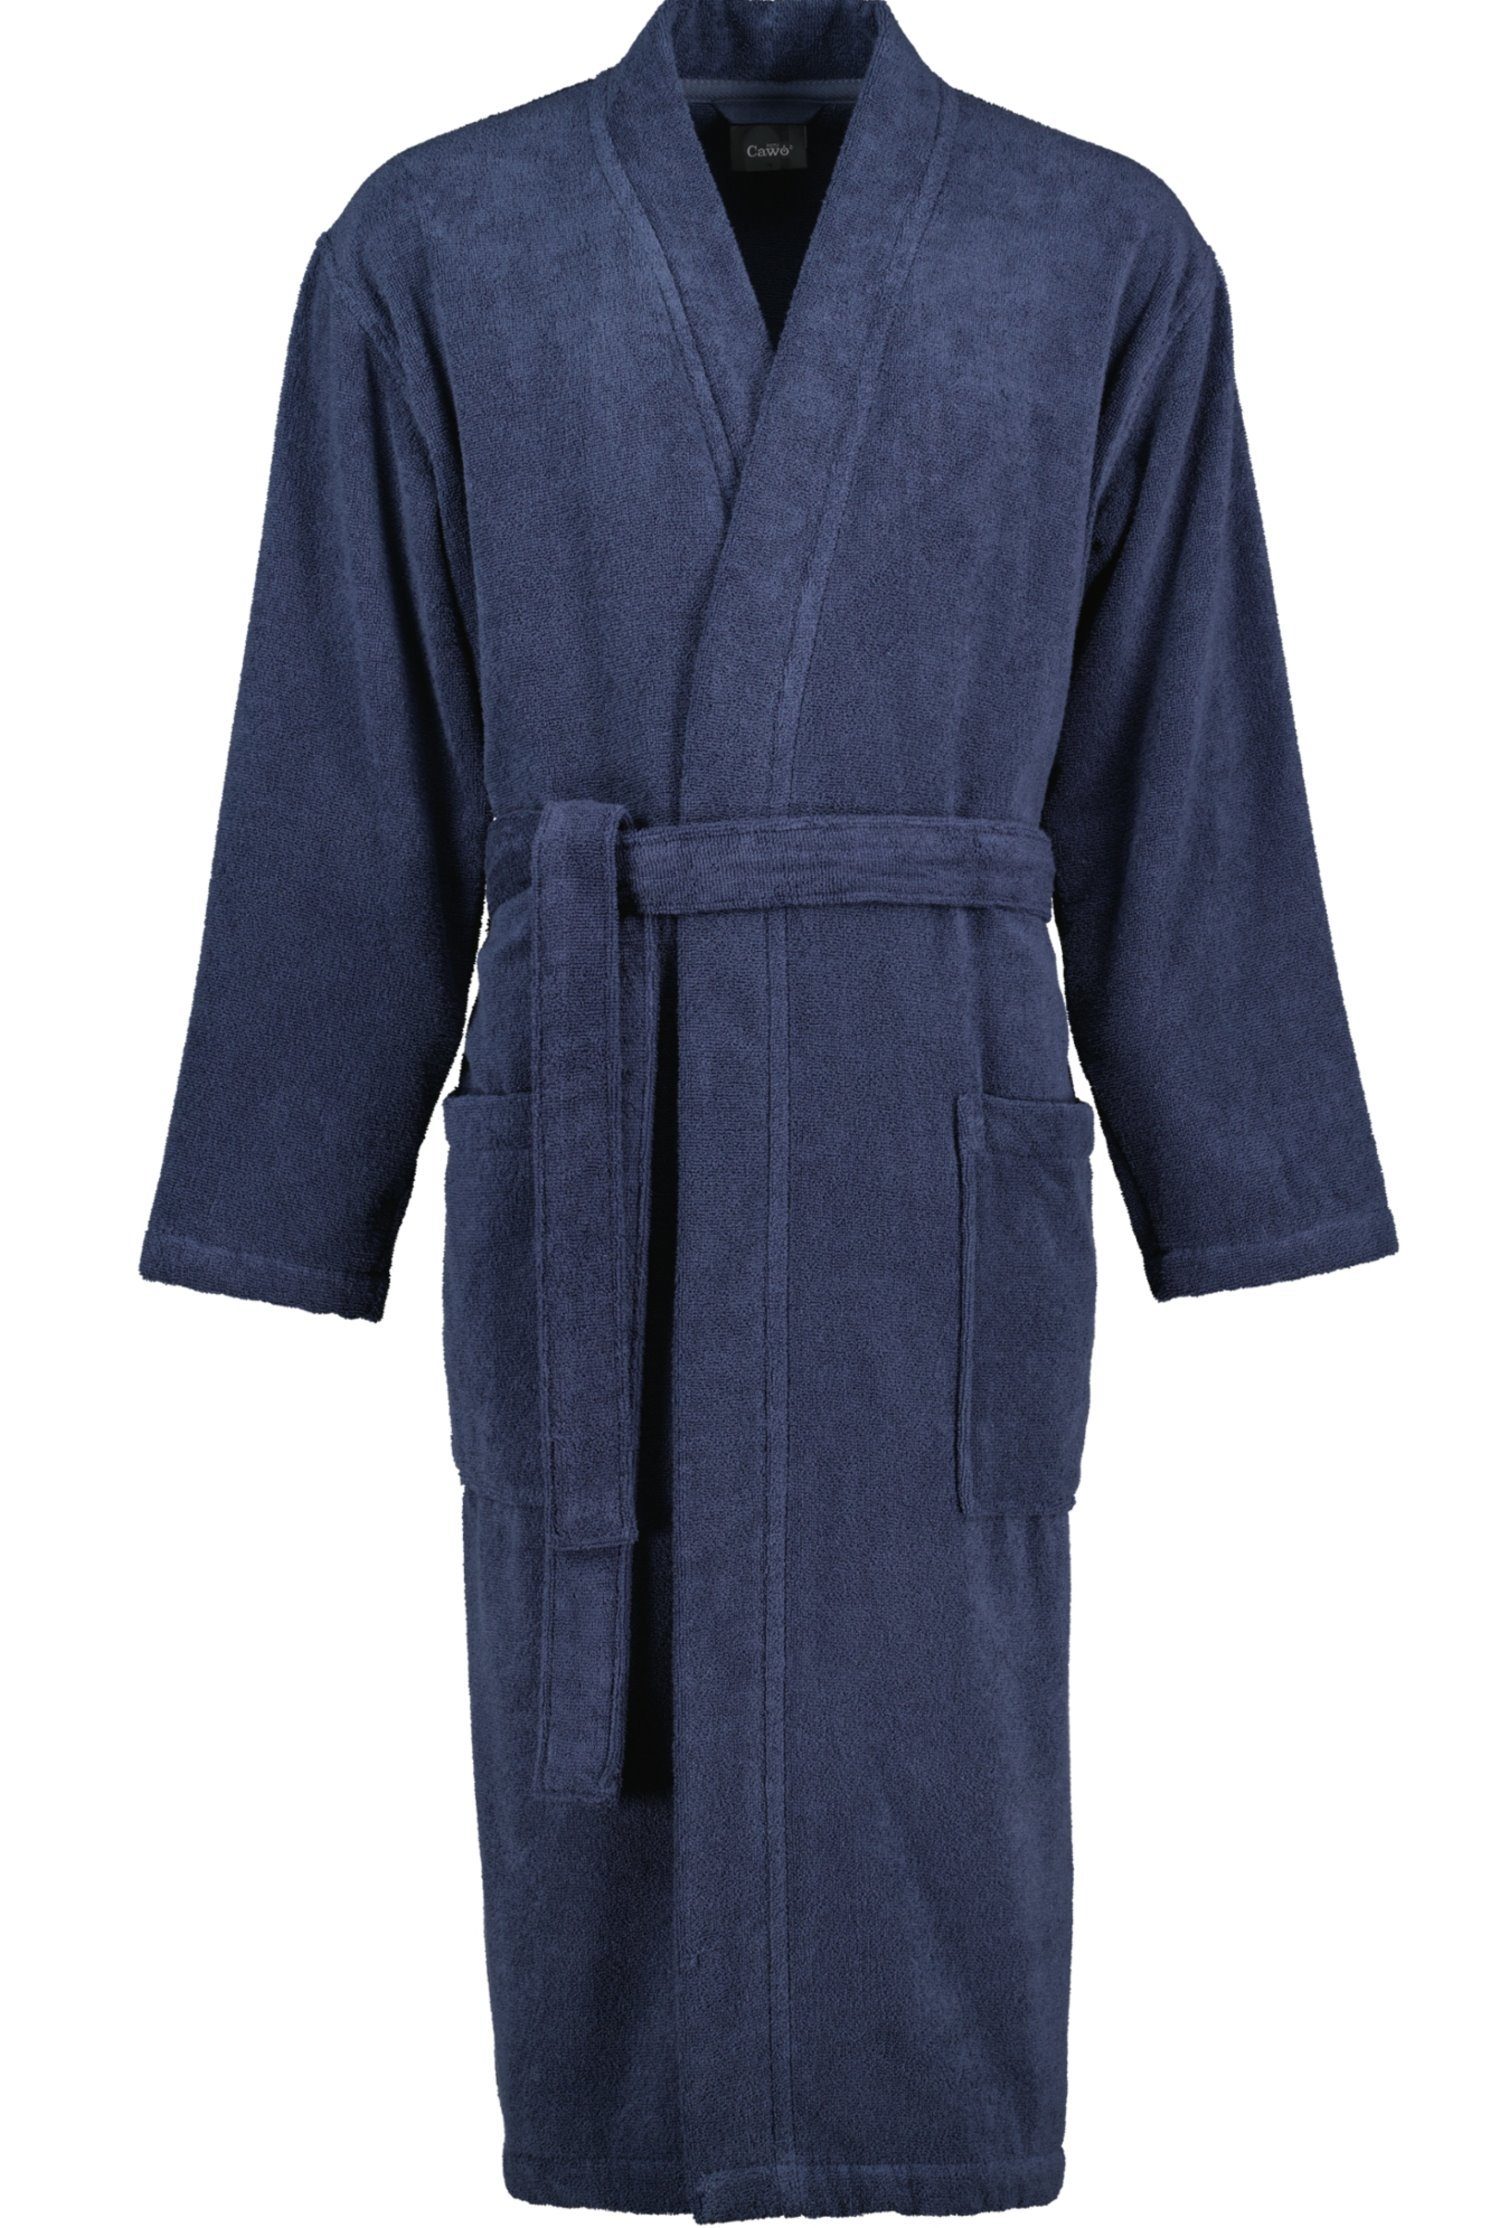 Herrenbademantel Baumwolle, Home 828 100% Frottier, Uni-Design Kimono Zeitloses Cawö Kimono, Uni